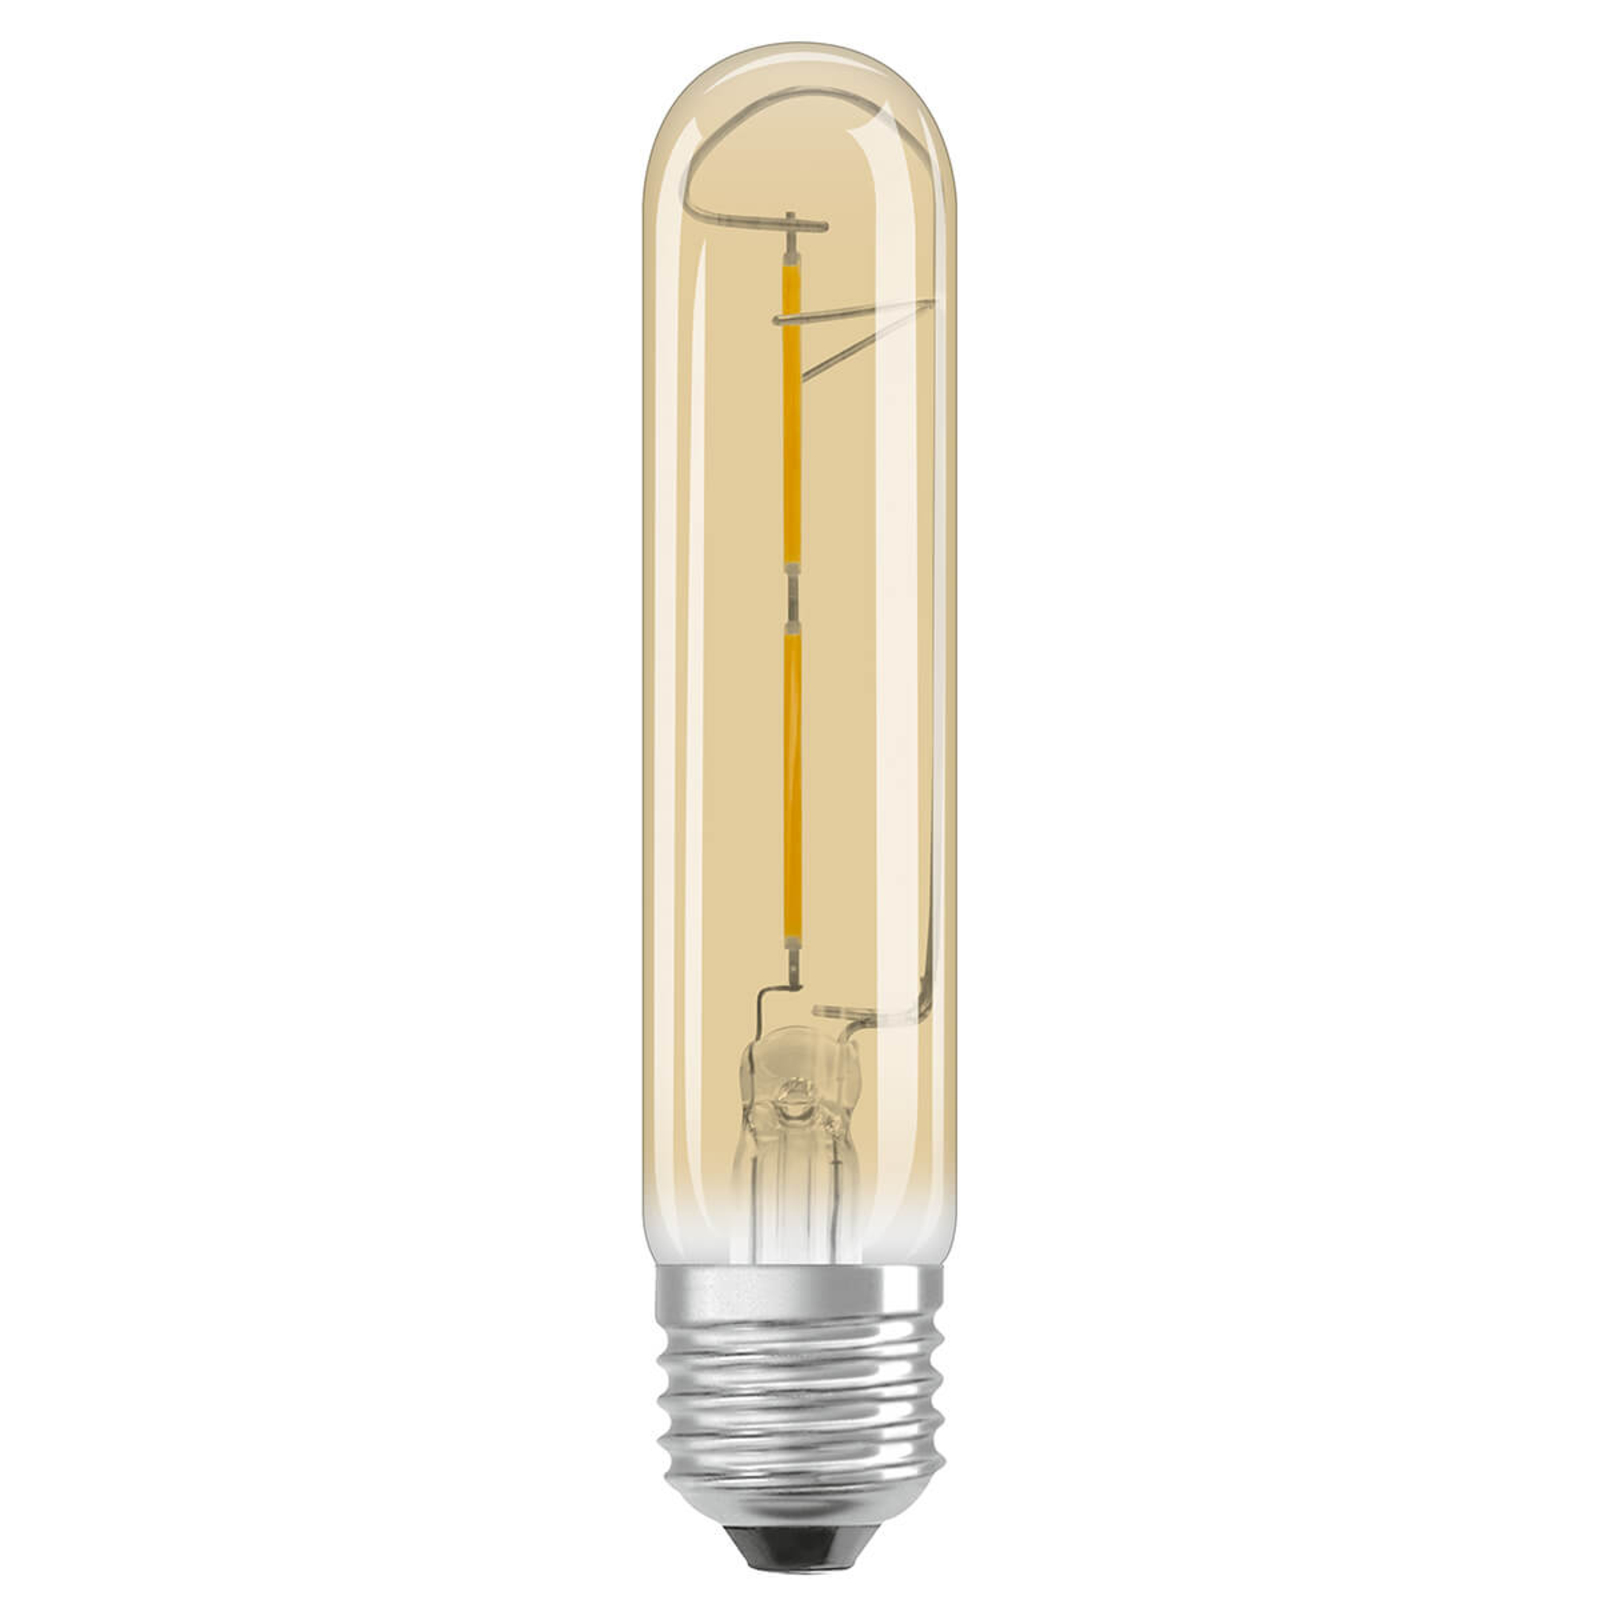 LED tube Gold E27 2,5W, ciepła biel, 200 lumenów